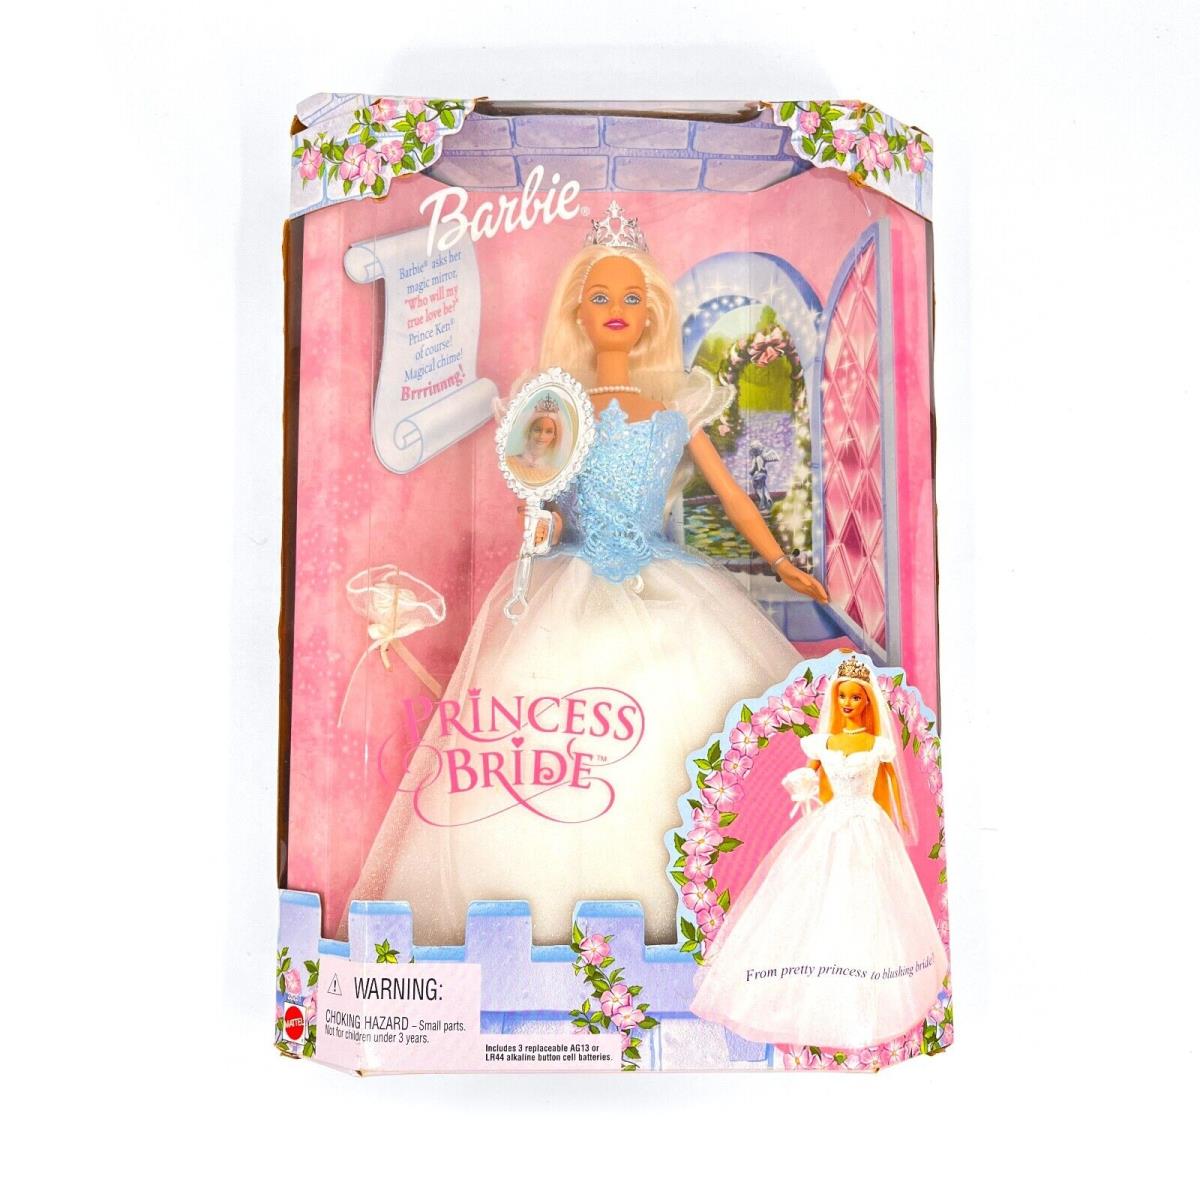 Barbie Mattel Princess Bride Barbie 2000 28251